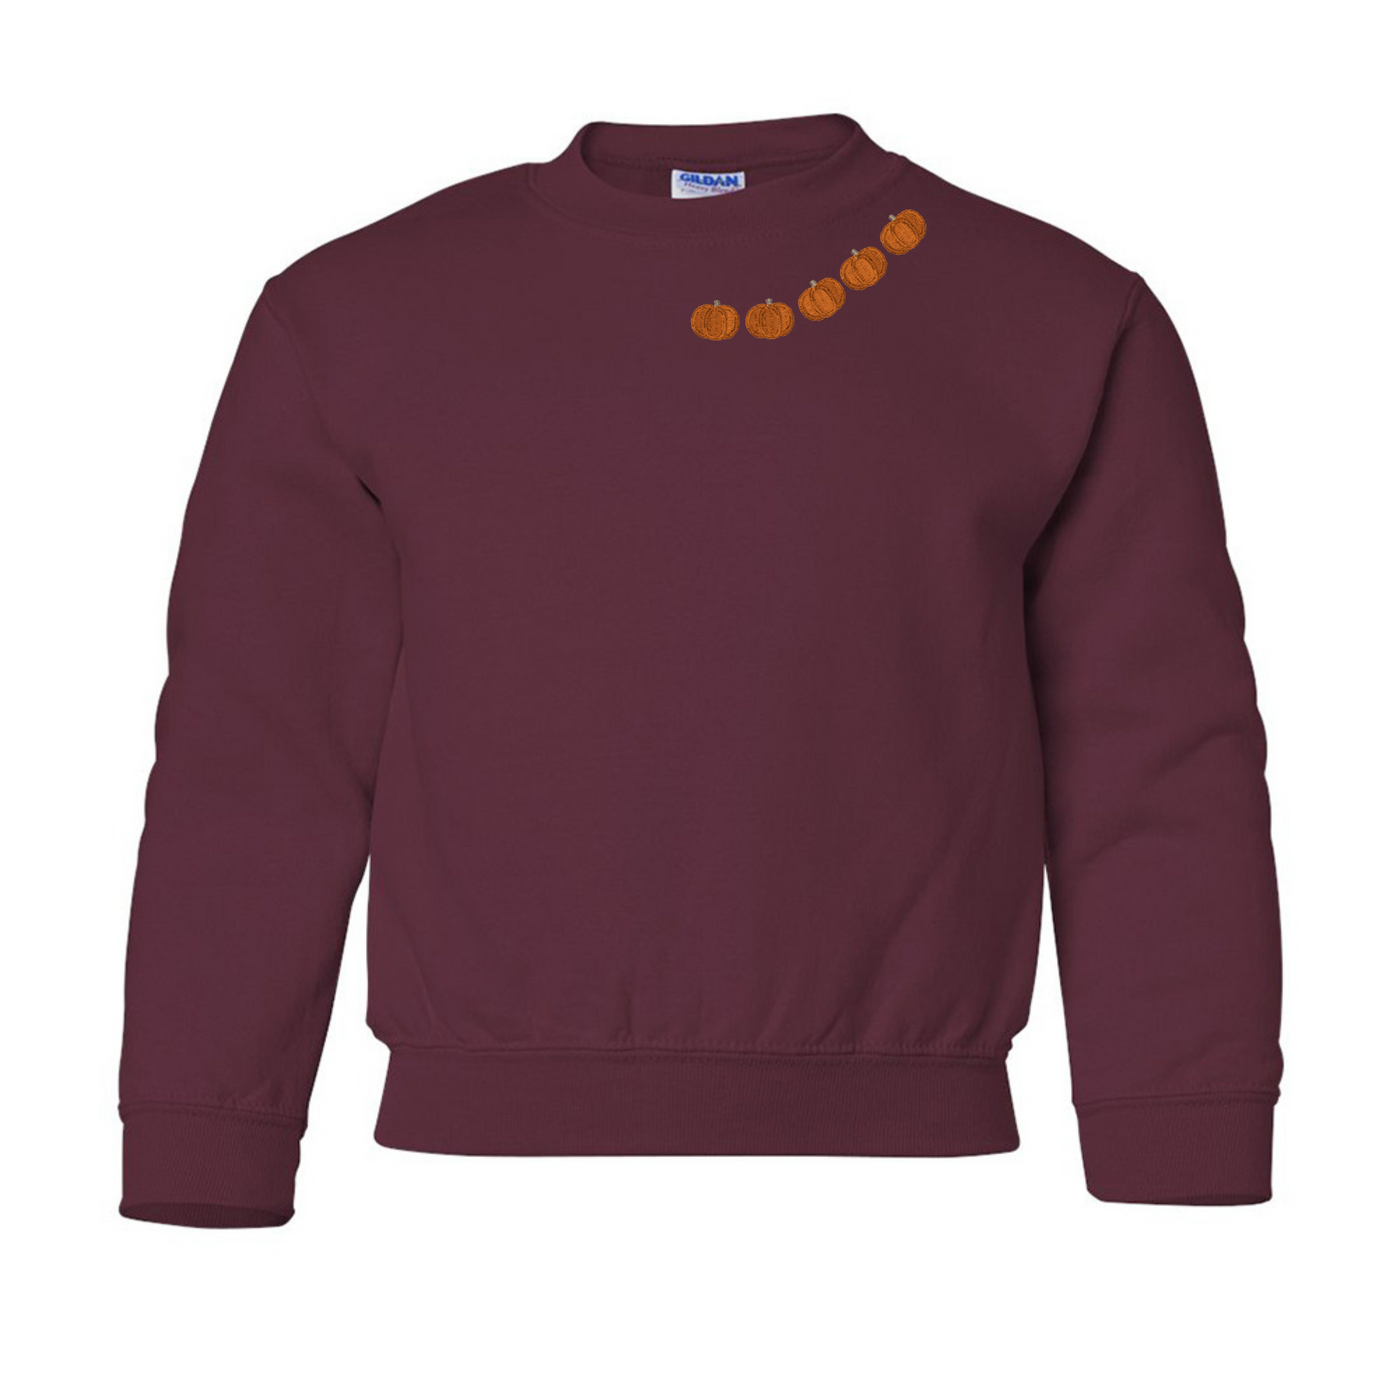 Kids 'Pumpkin Collar' Crewneck Sweatshirt